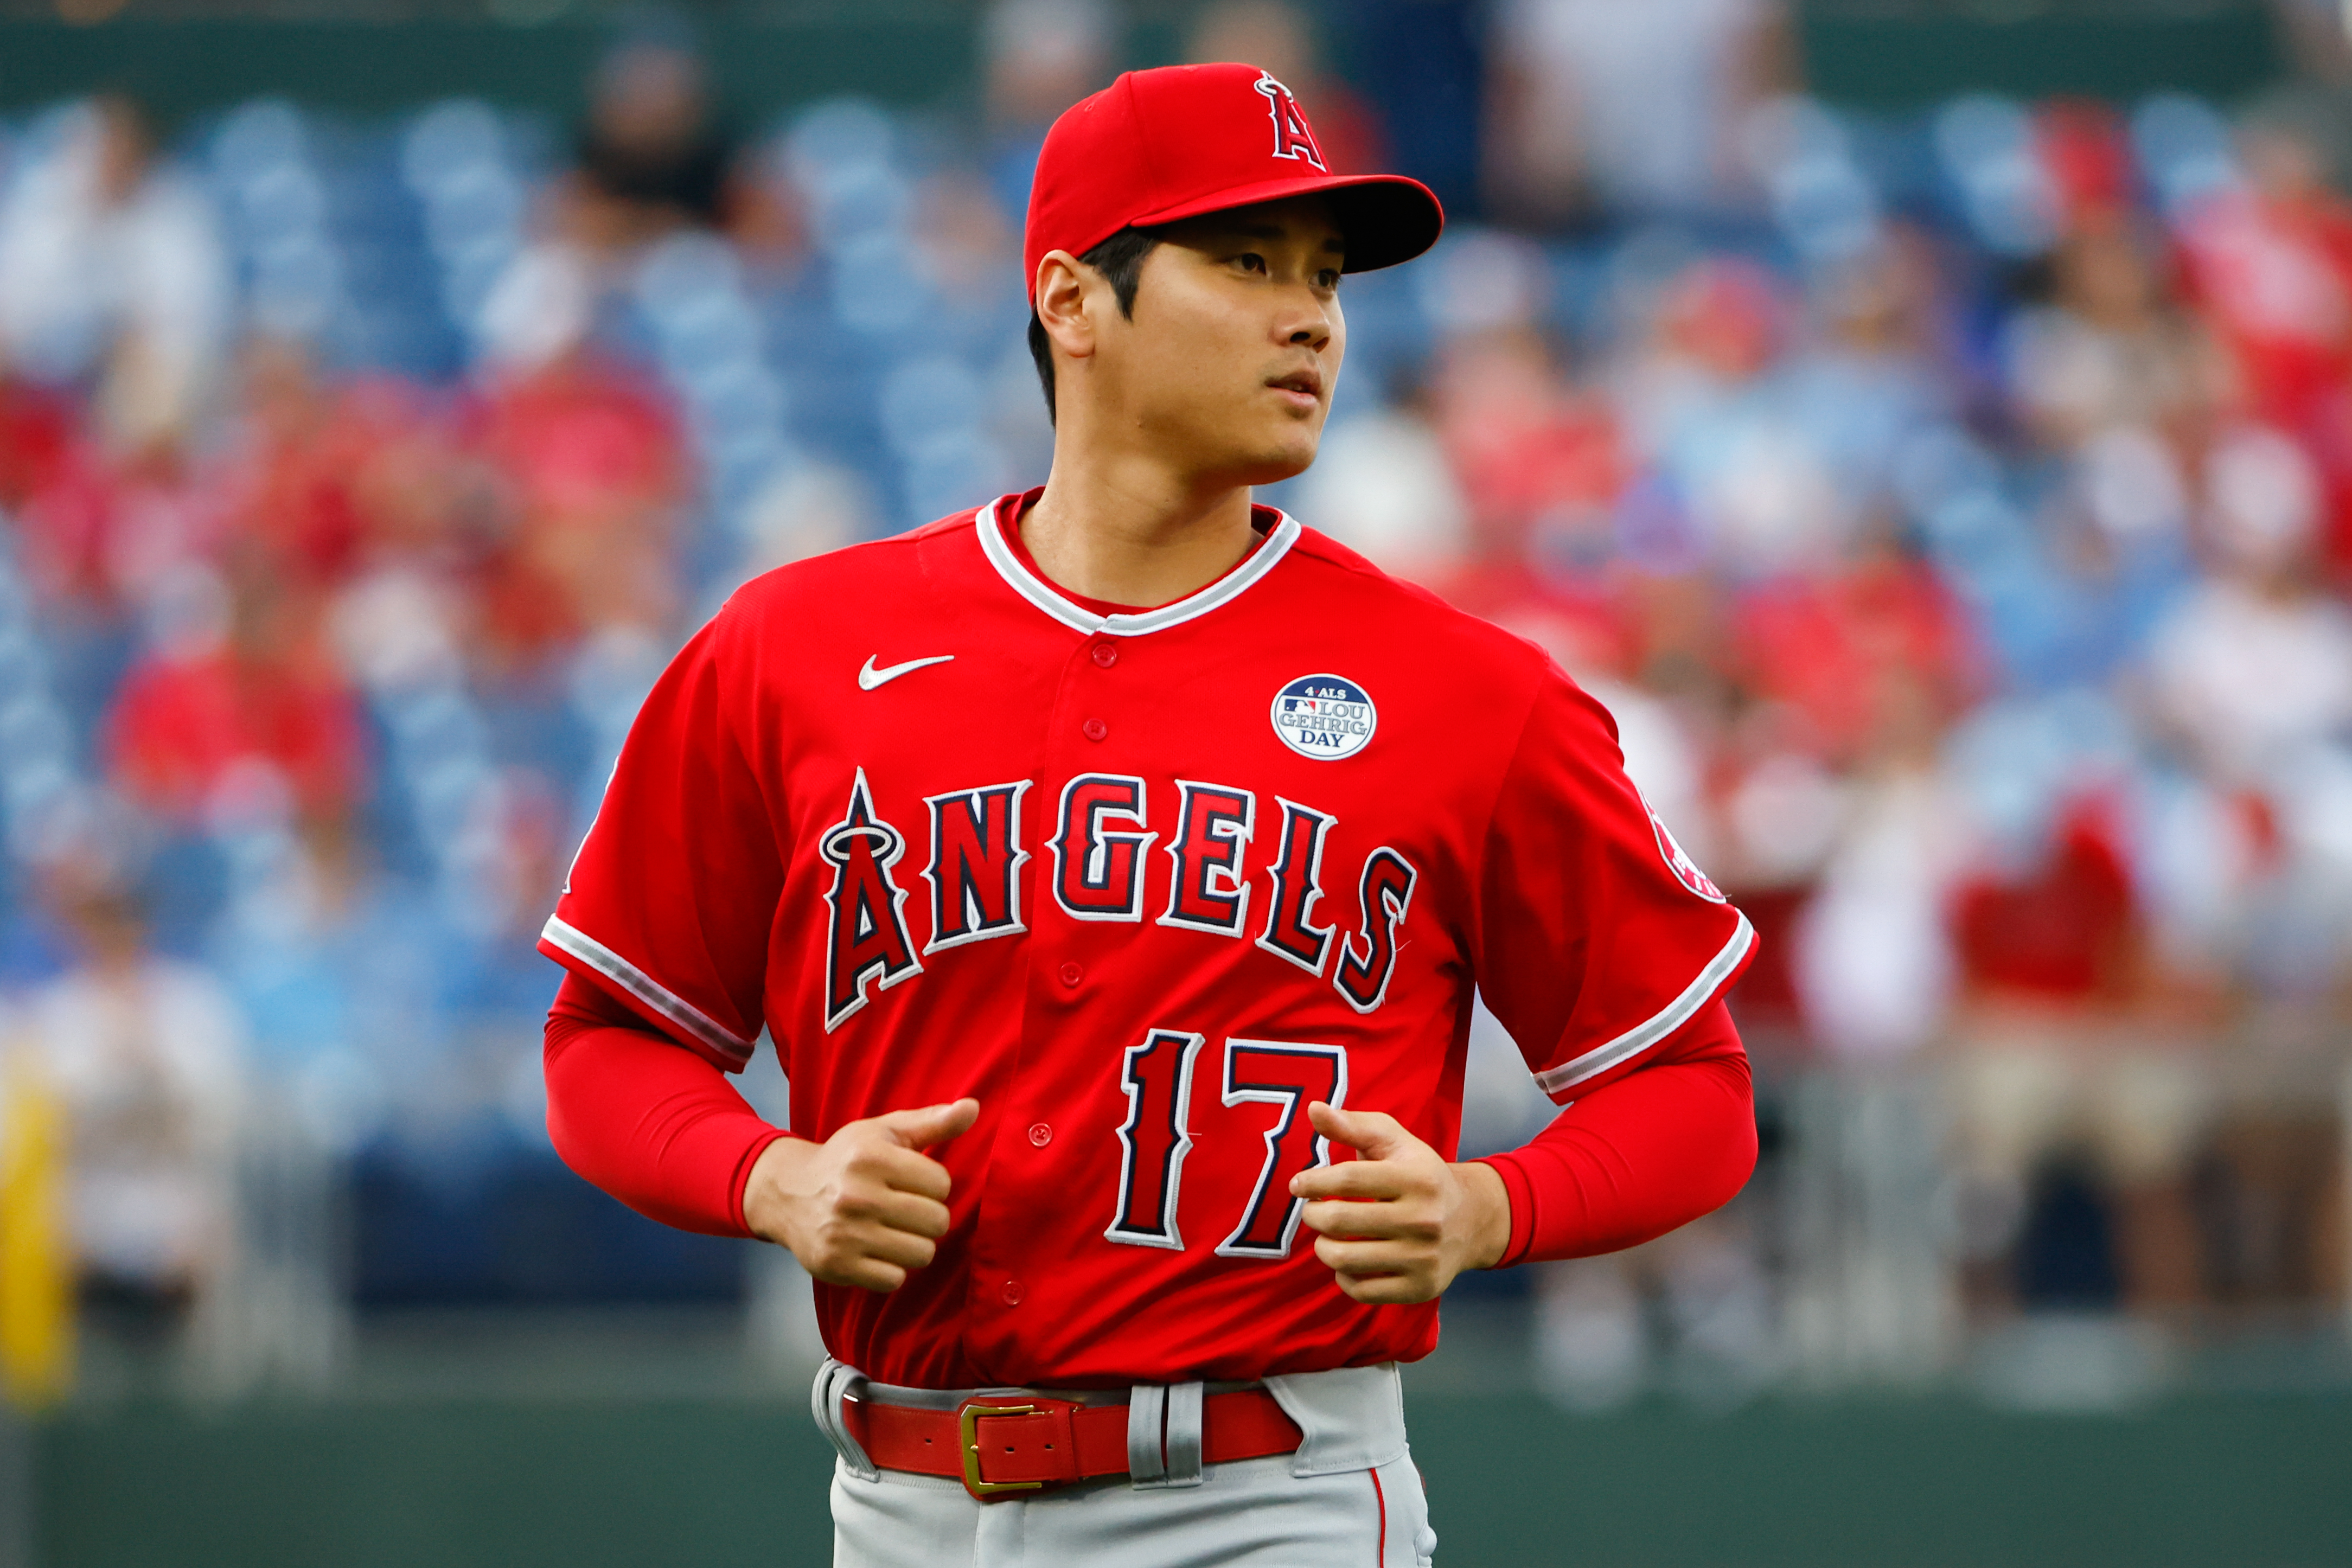 Angels' Shohei Ohtani is No. 1 among MLB prospects: survey - The Japan Times